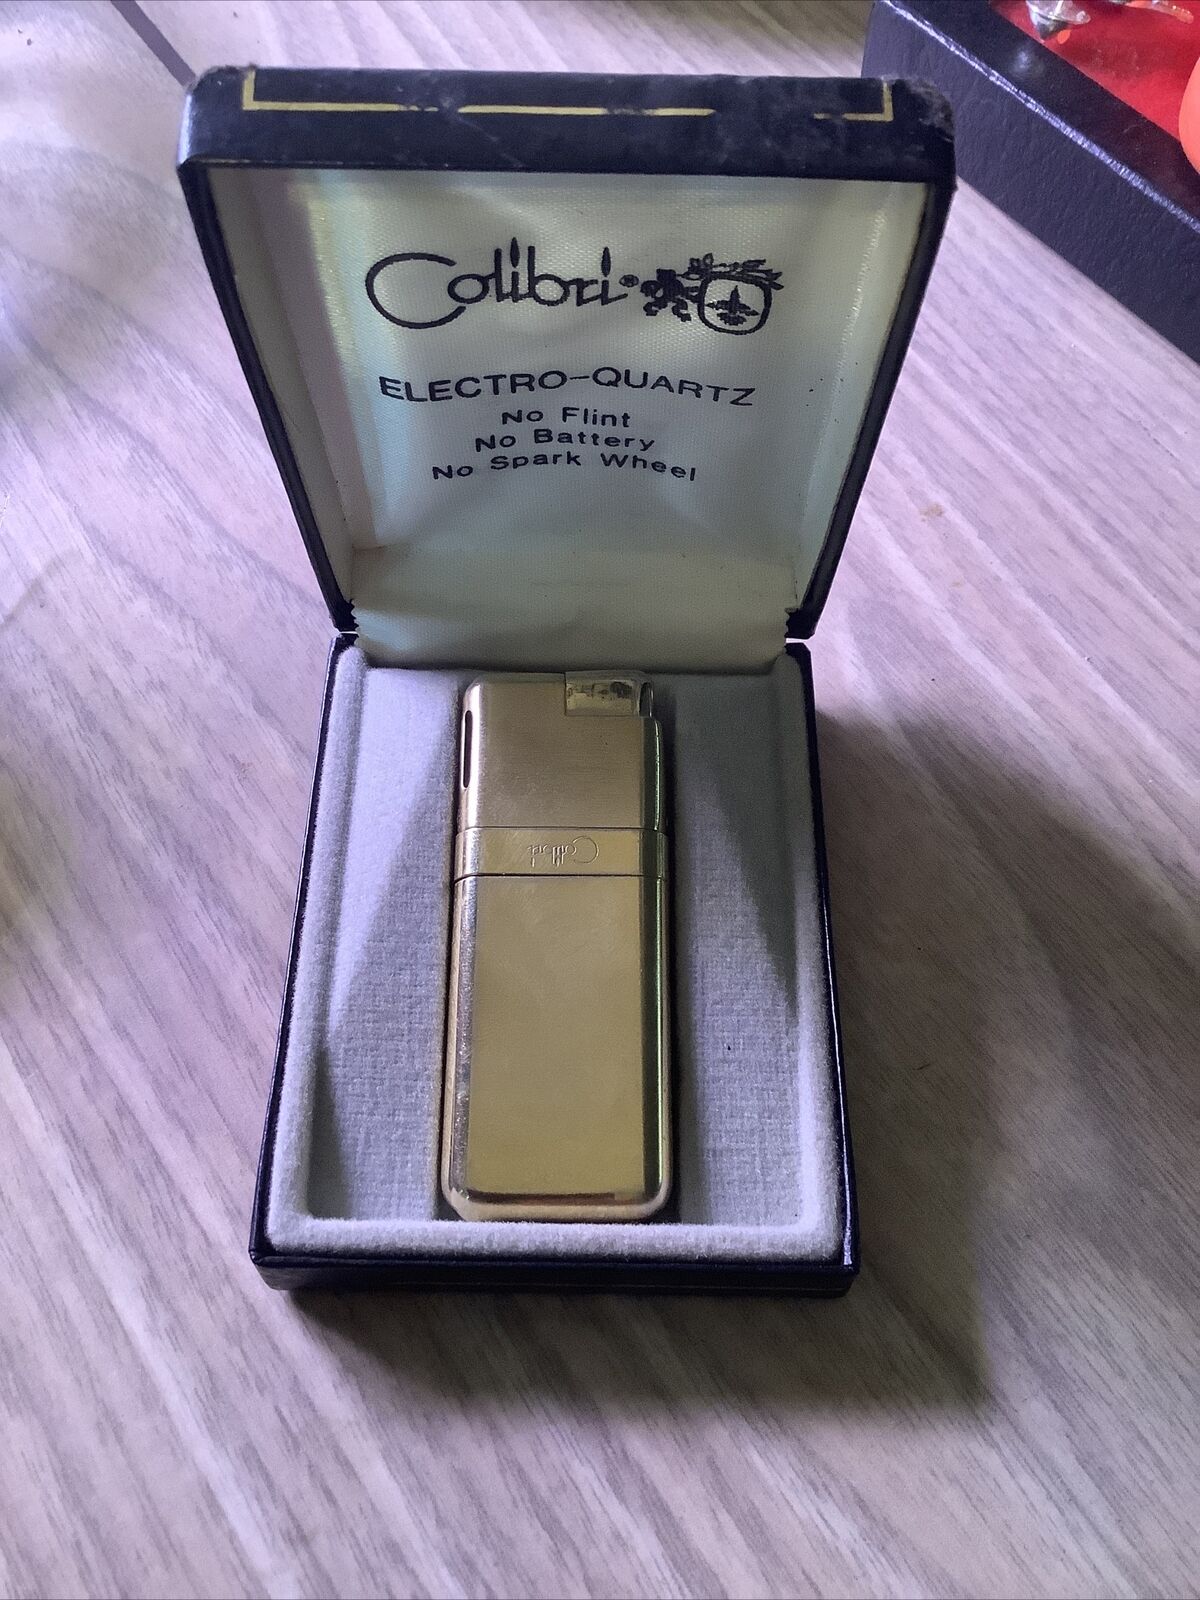 Vintage Colibri Electro-quartz Lighter No Flint No Battery No Spark Wheel